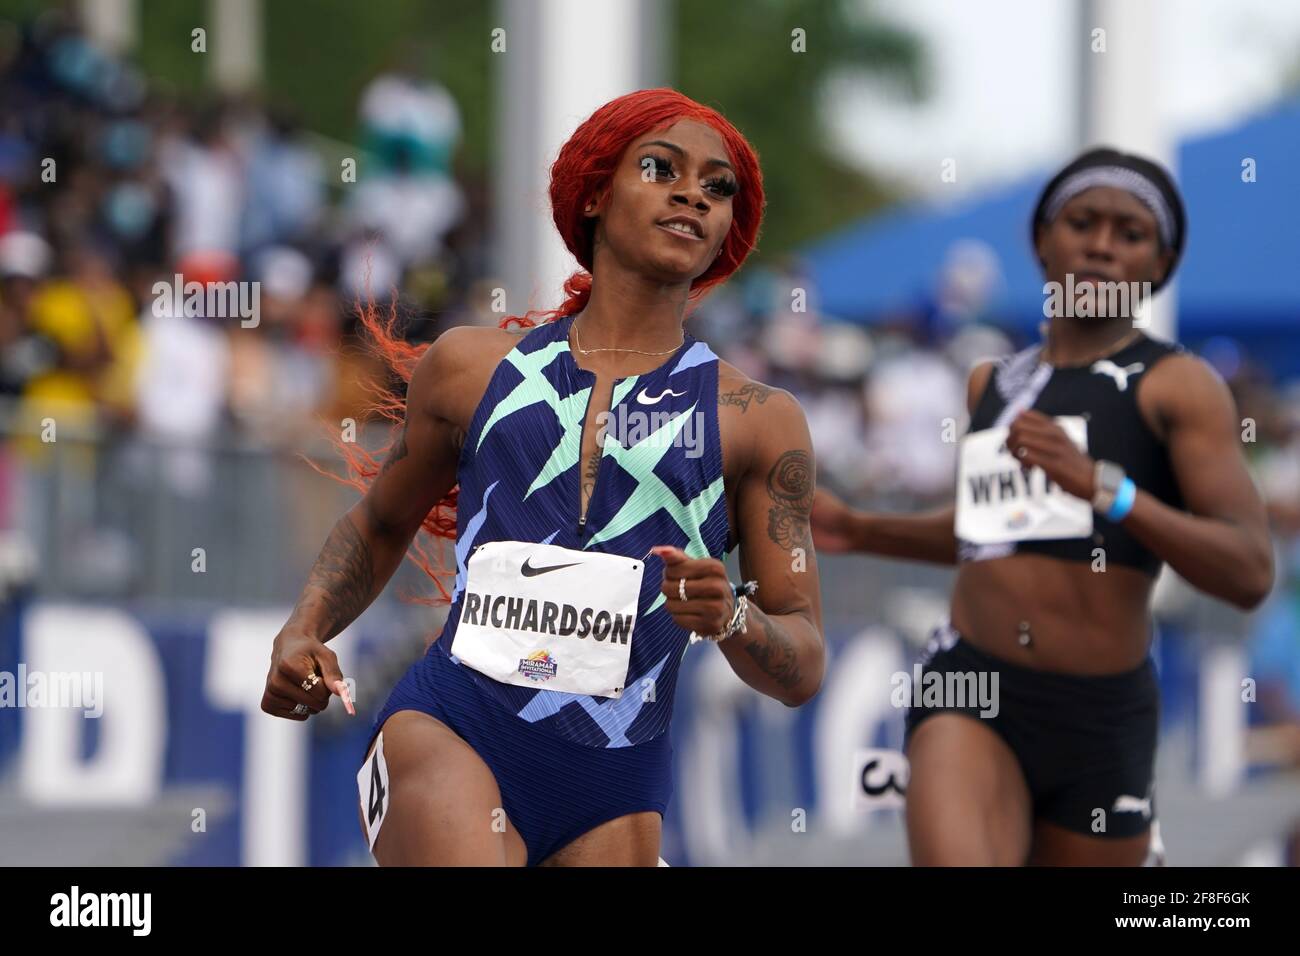 SHA'Carri Richardson (Etats-Unis) remporte le 100 m féminin en 10.72 lors de la Miramar Invitational, le samedi 10 avril 2021, à Miramar, Fla Banque D'Images